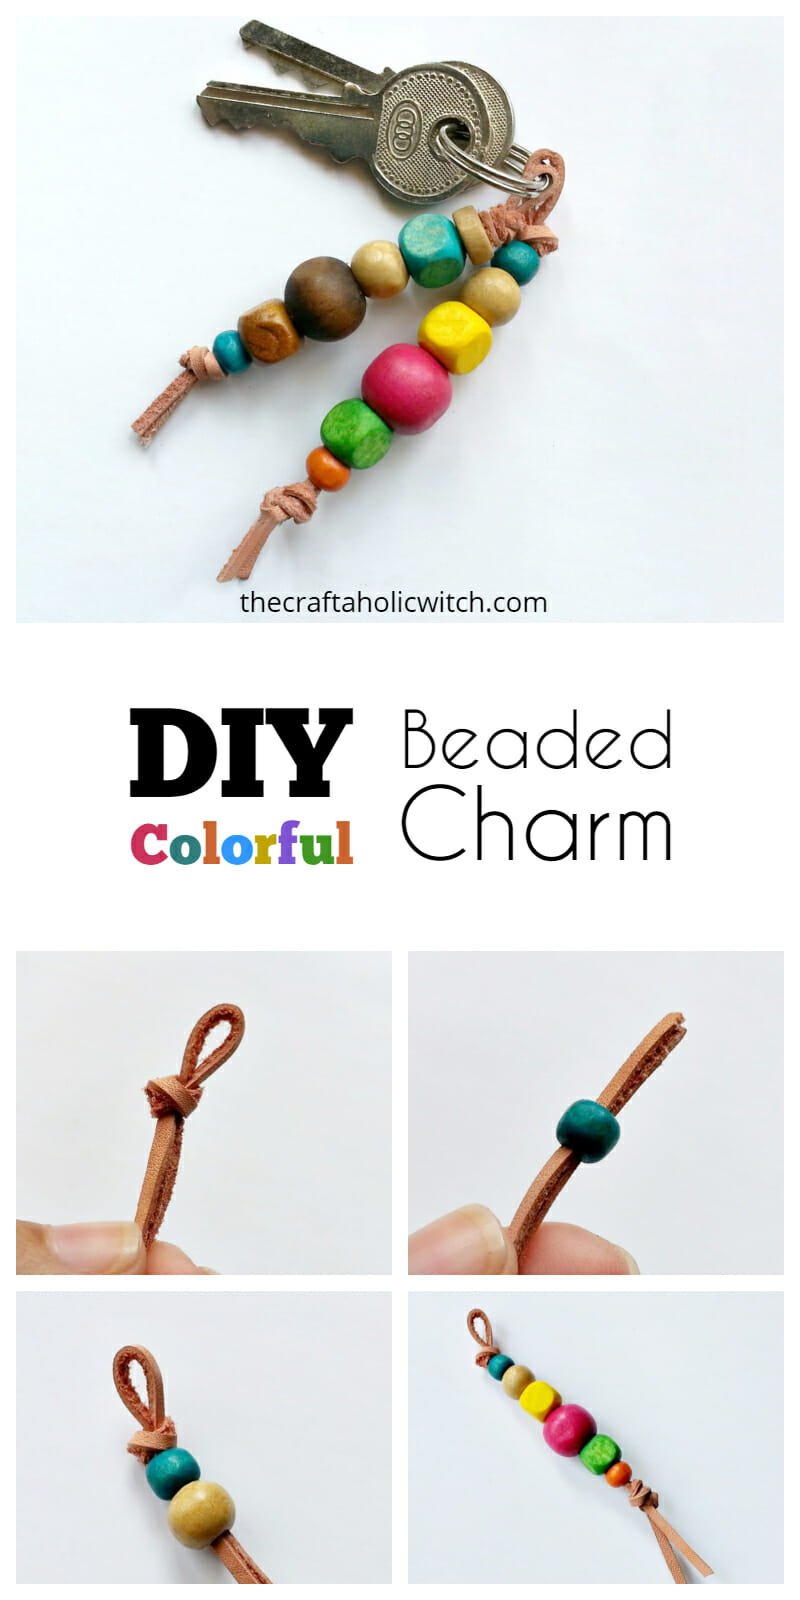 beaded charm pin image - DIY Wooden Beaded Charm